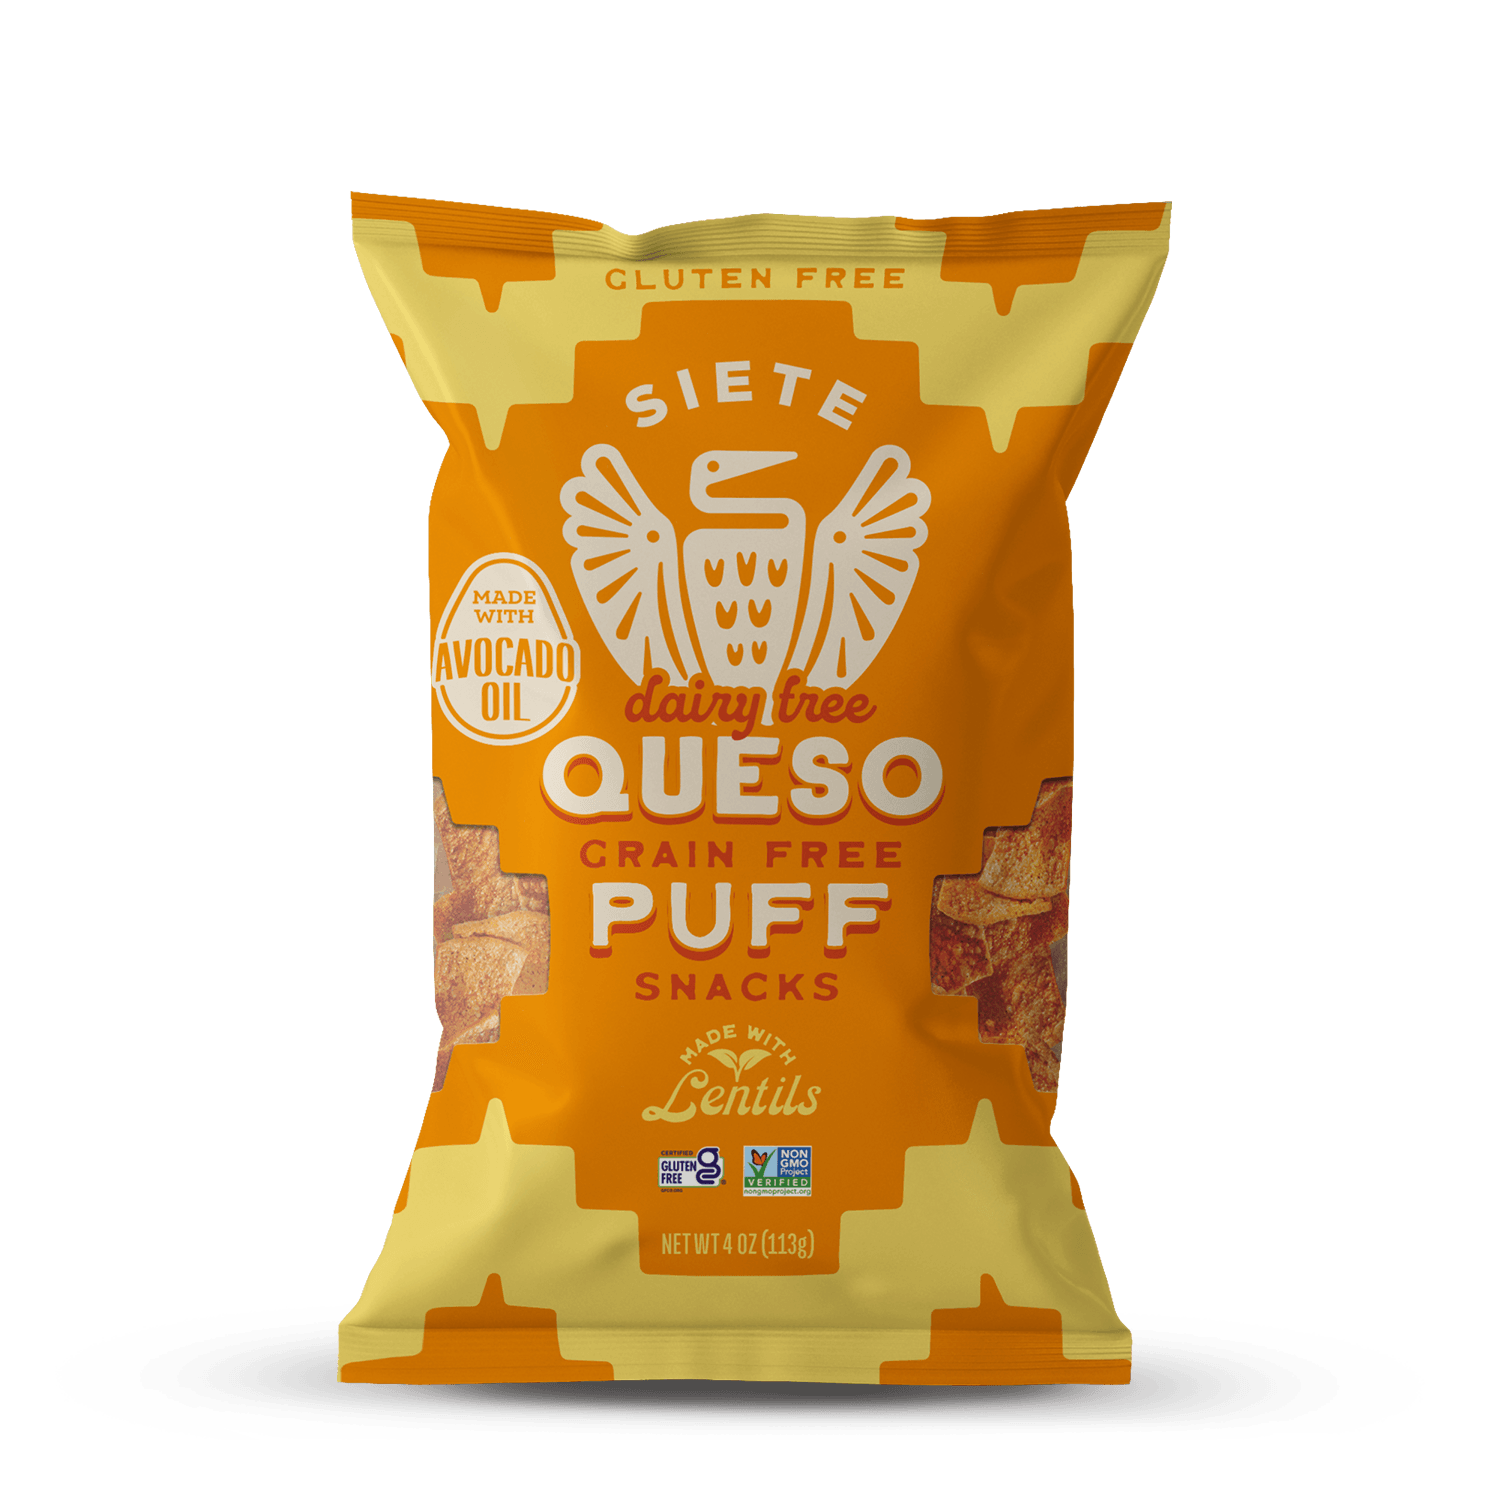 Queso Grain Free Puff Snacks - 6 Bags